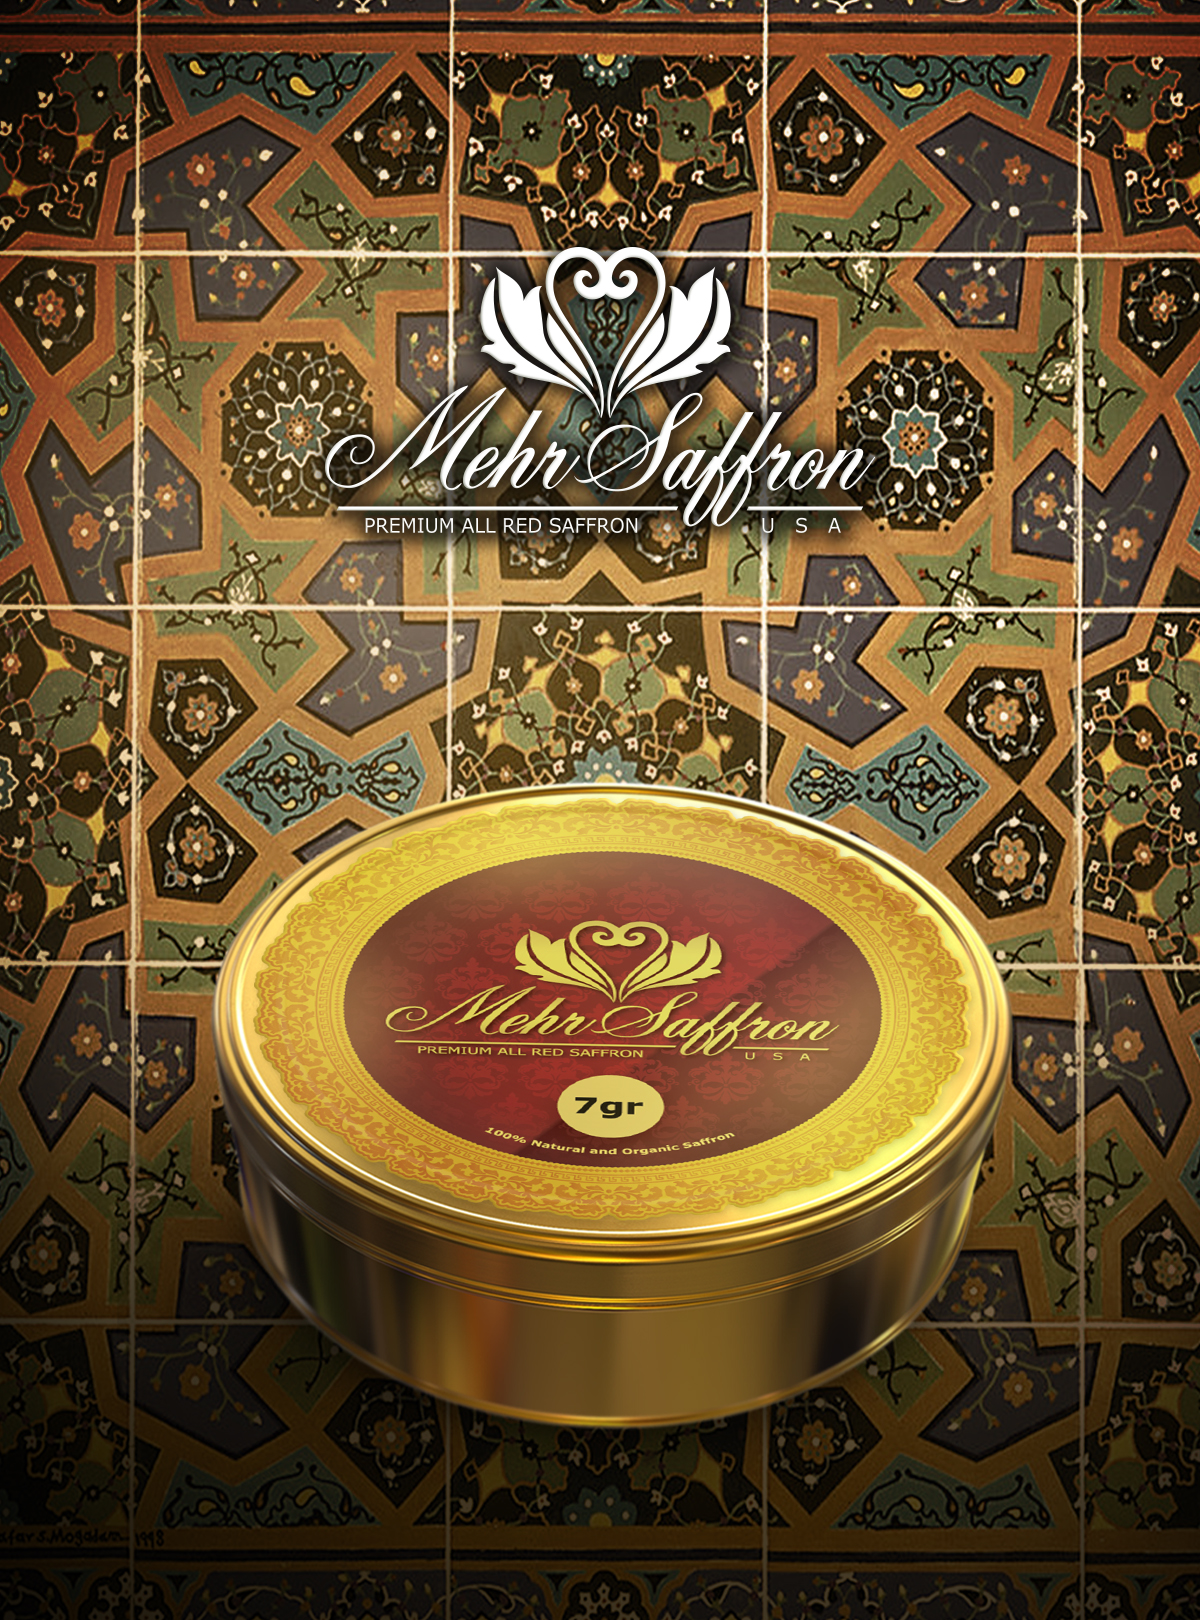 Mehr Saffron - Premium Afghan Persian Saffron 7 gram - 4